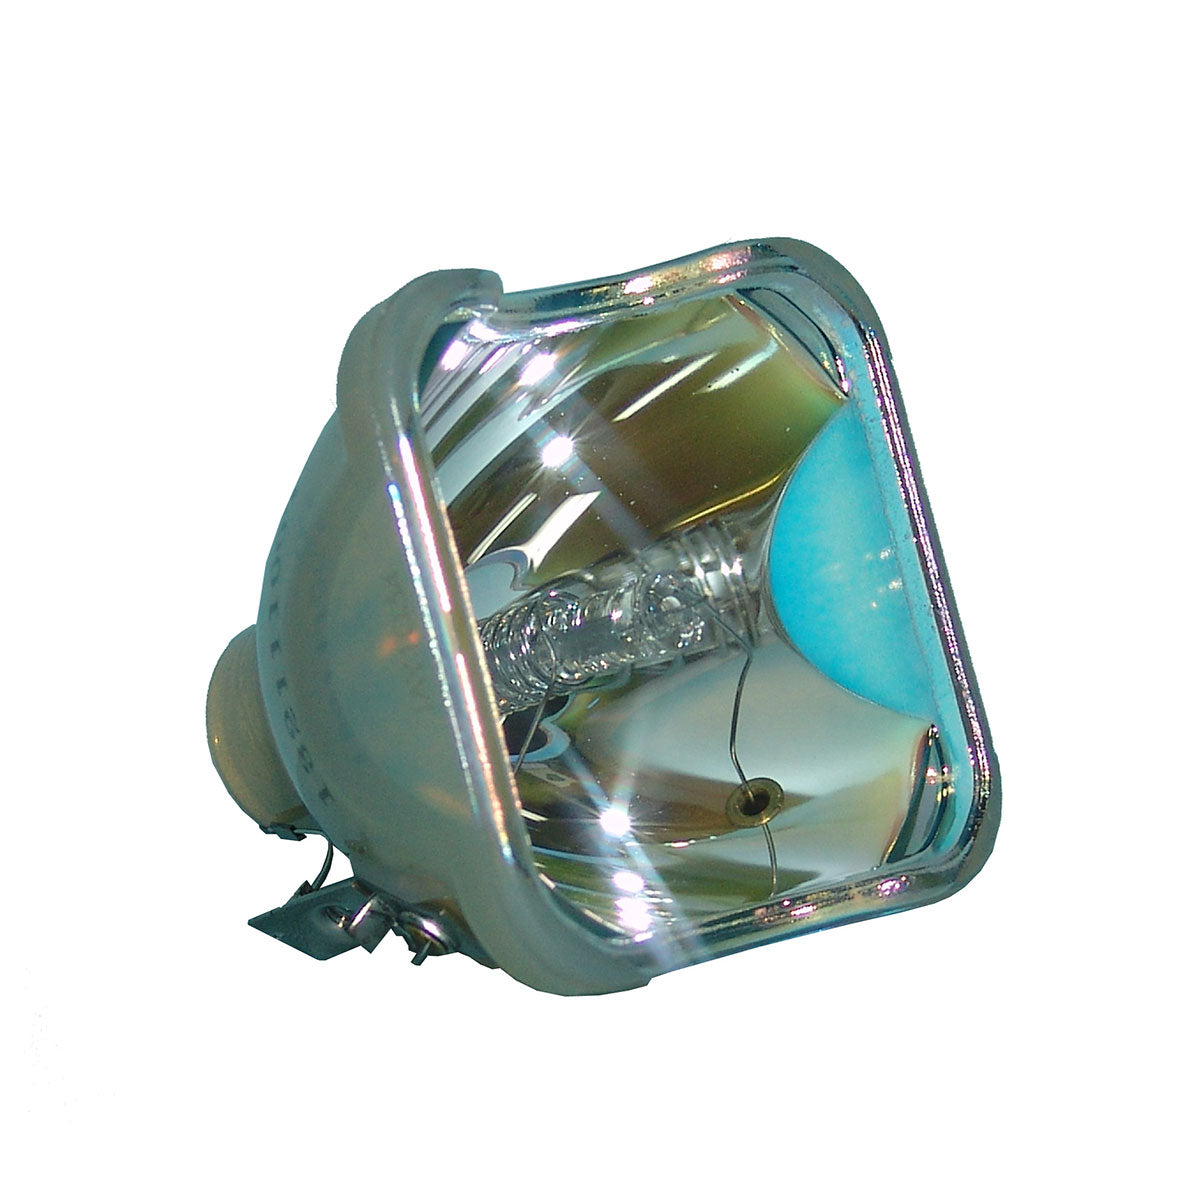 Triumph-Adler SP-LAMP-017 Osram Projector Bare Lamp